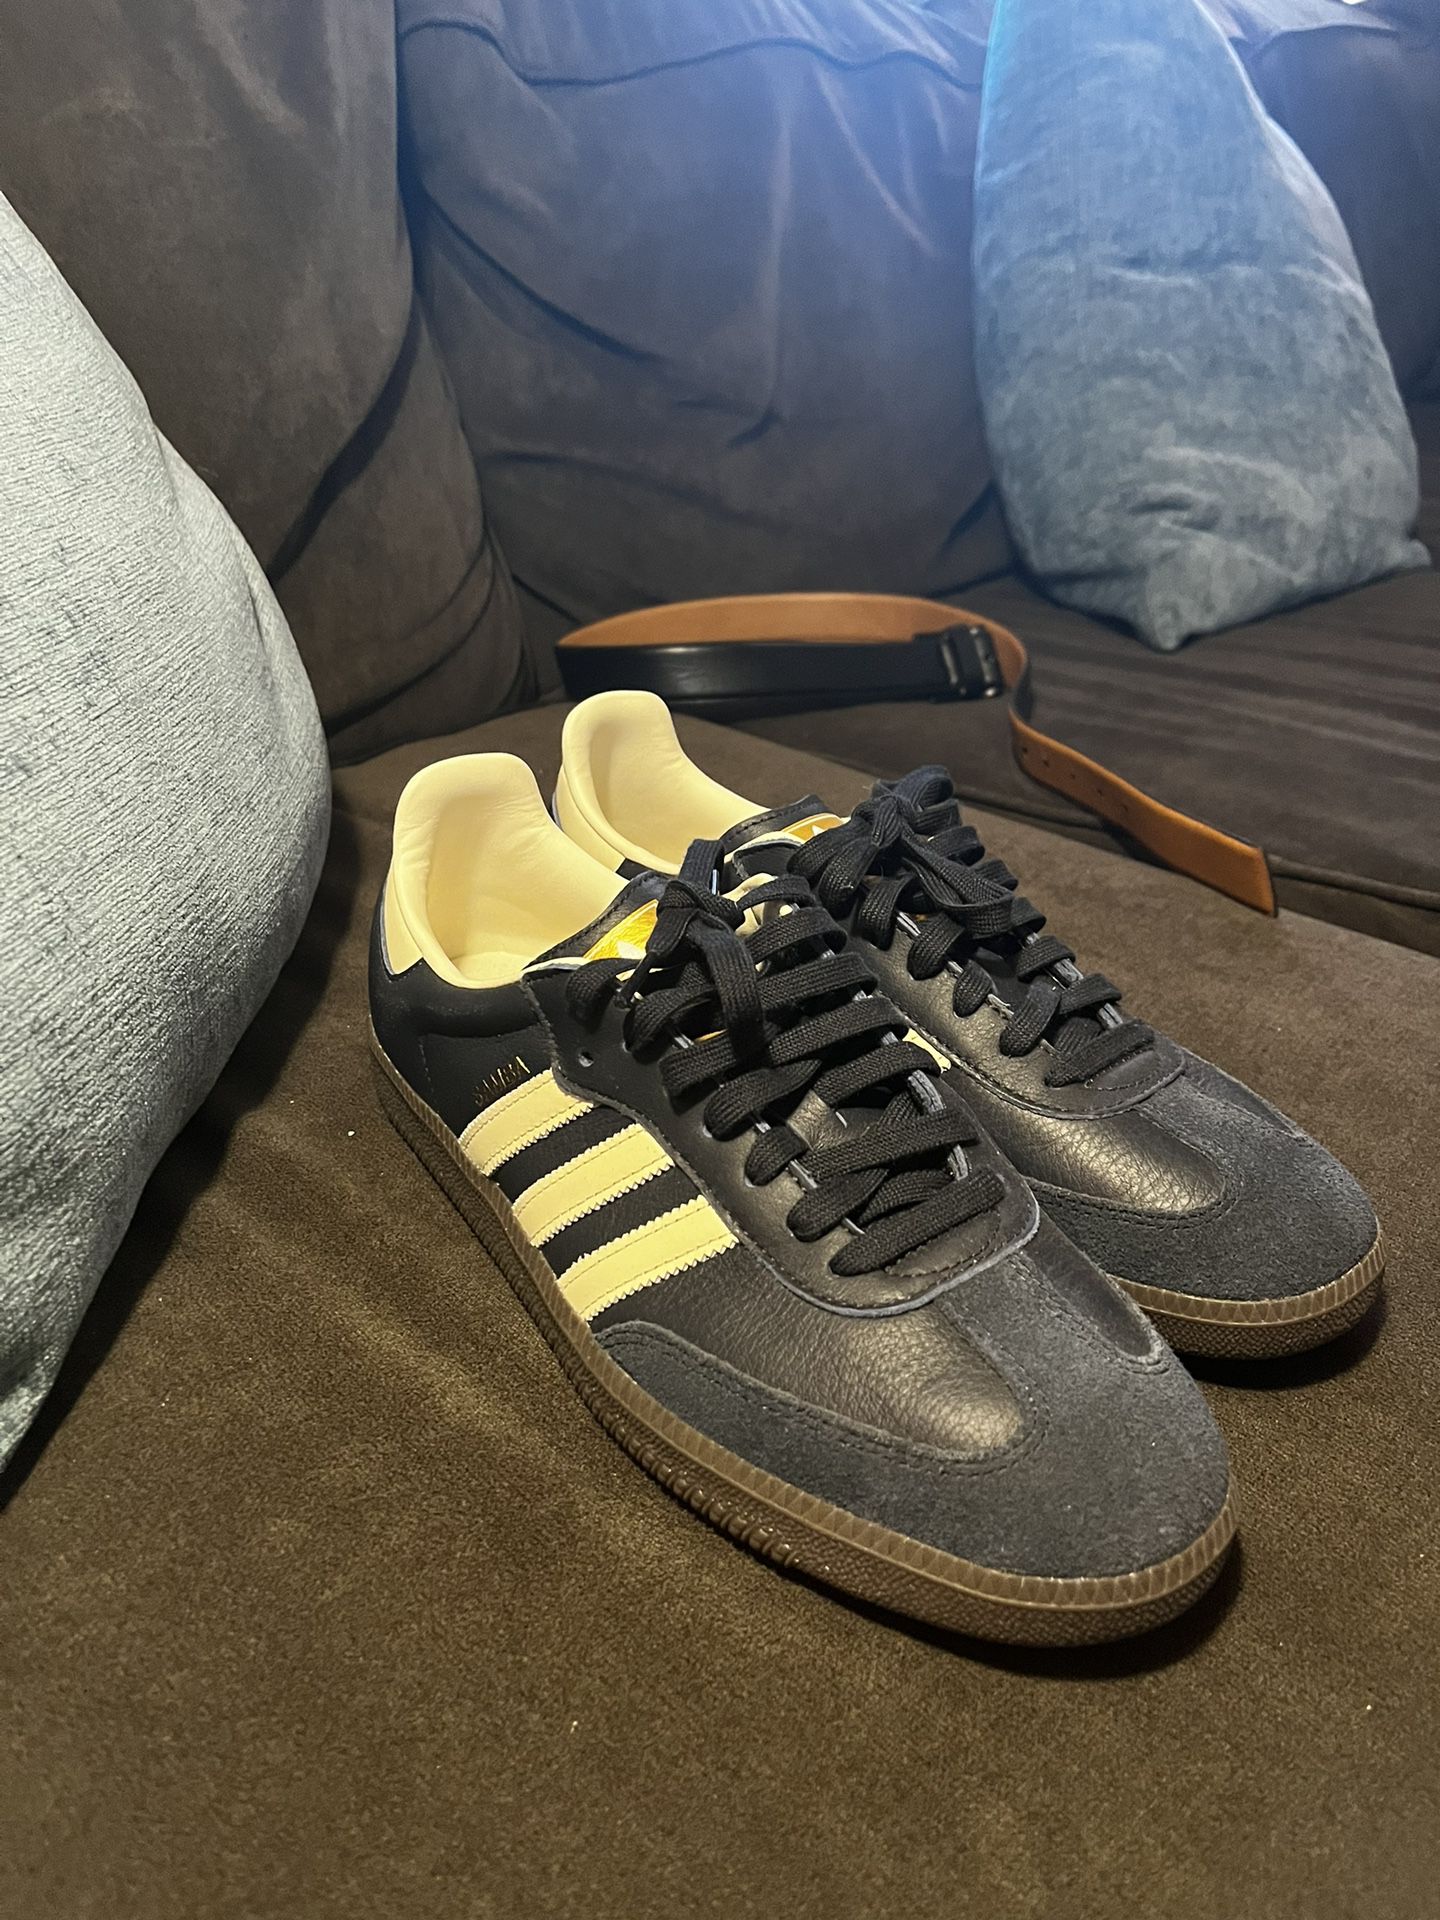 Adidas Sambas - Brand New - Men’s size 11